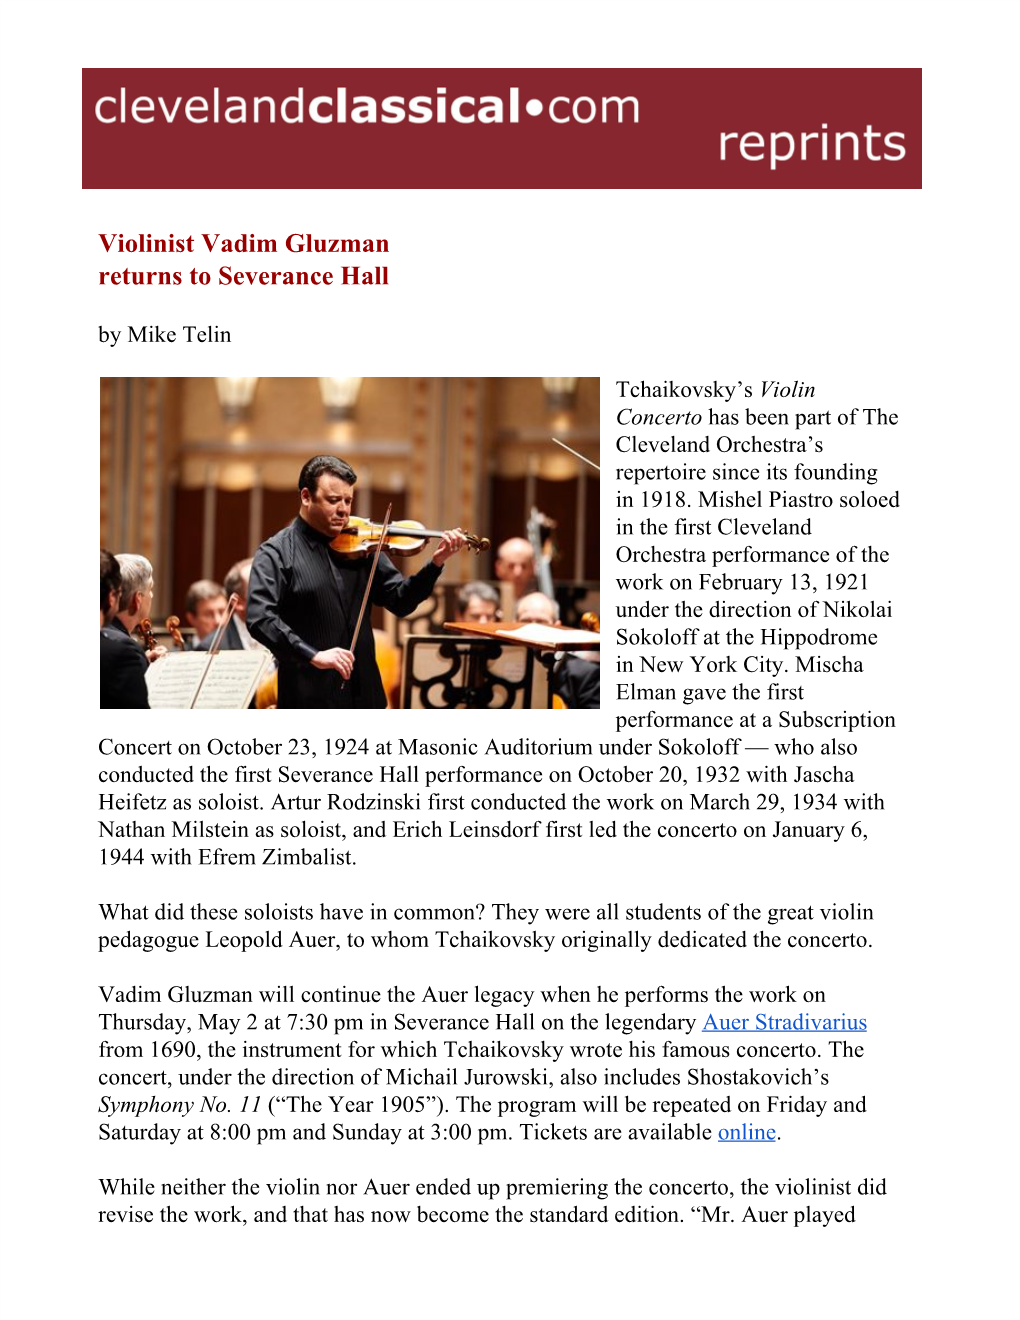 Violinist Vadim Gluzman Returns to Severance Hall by Mike Telin